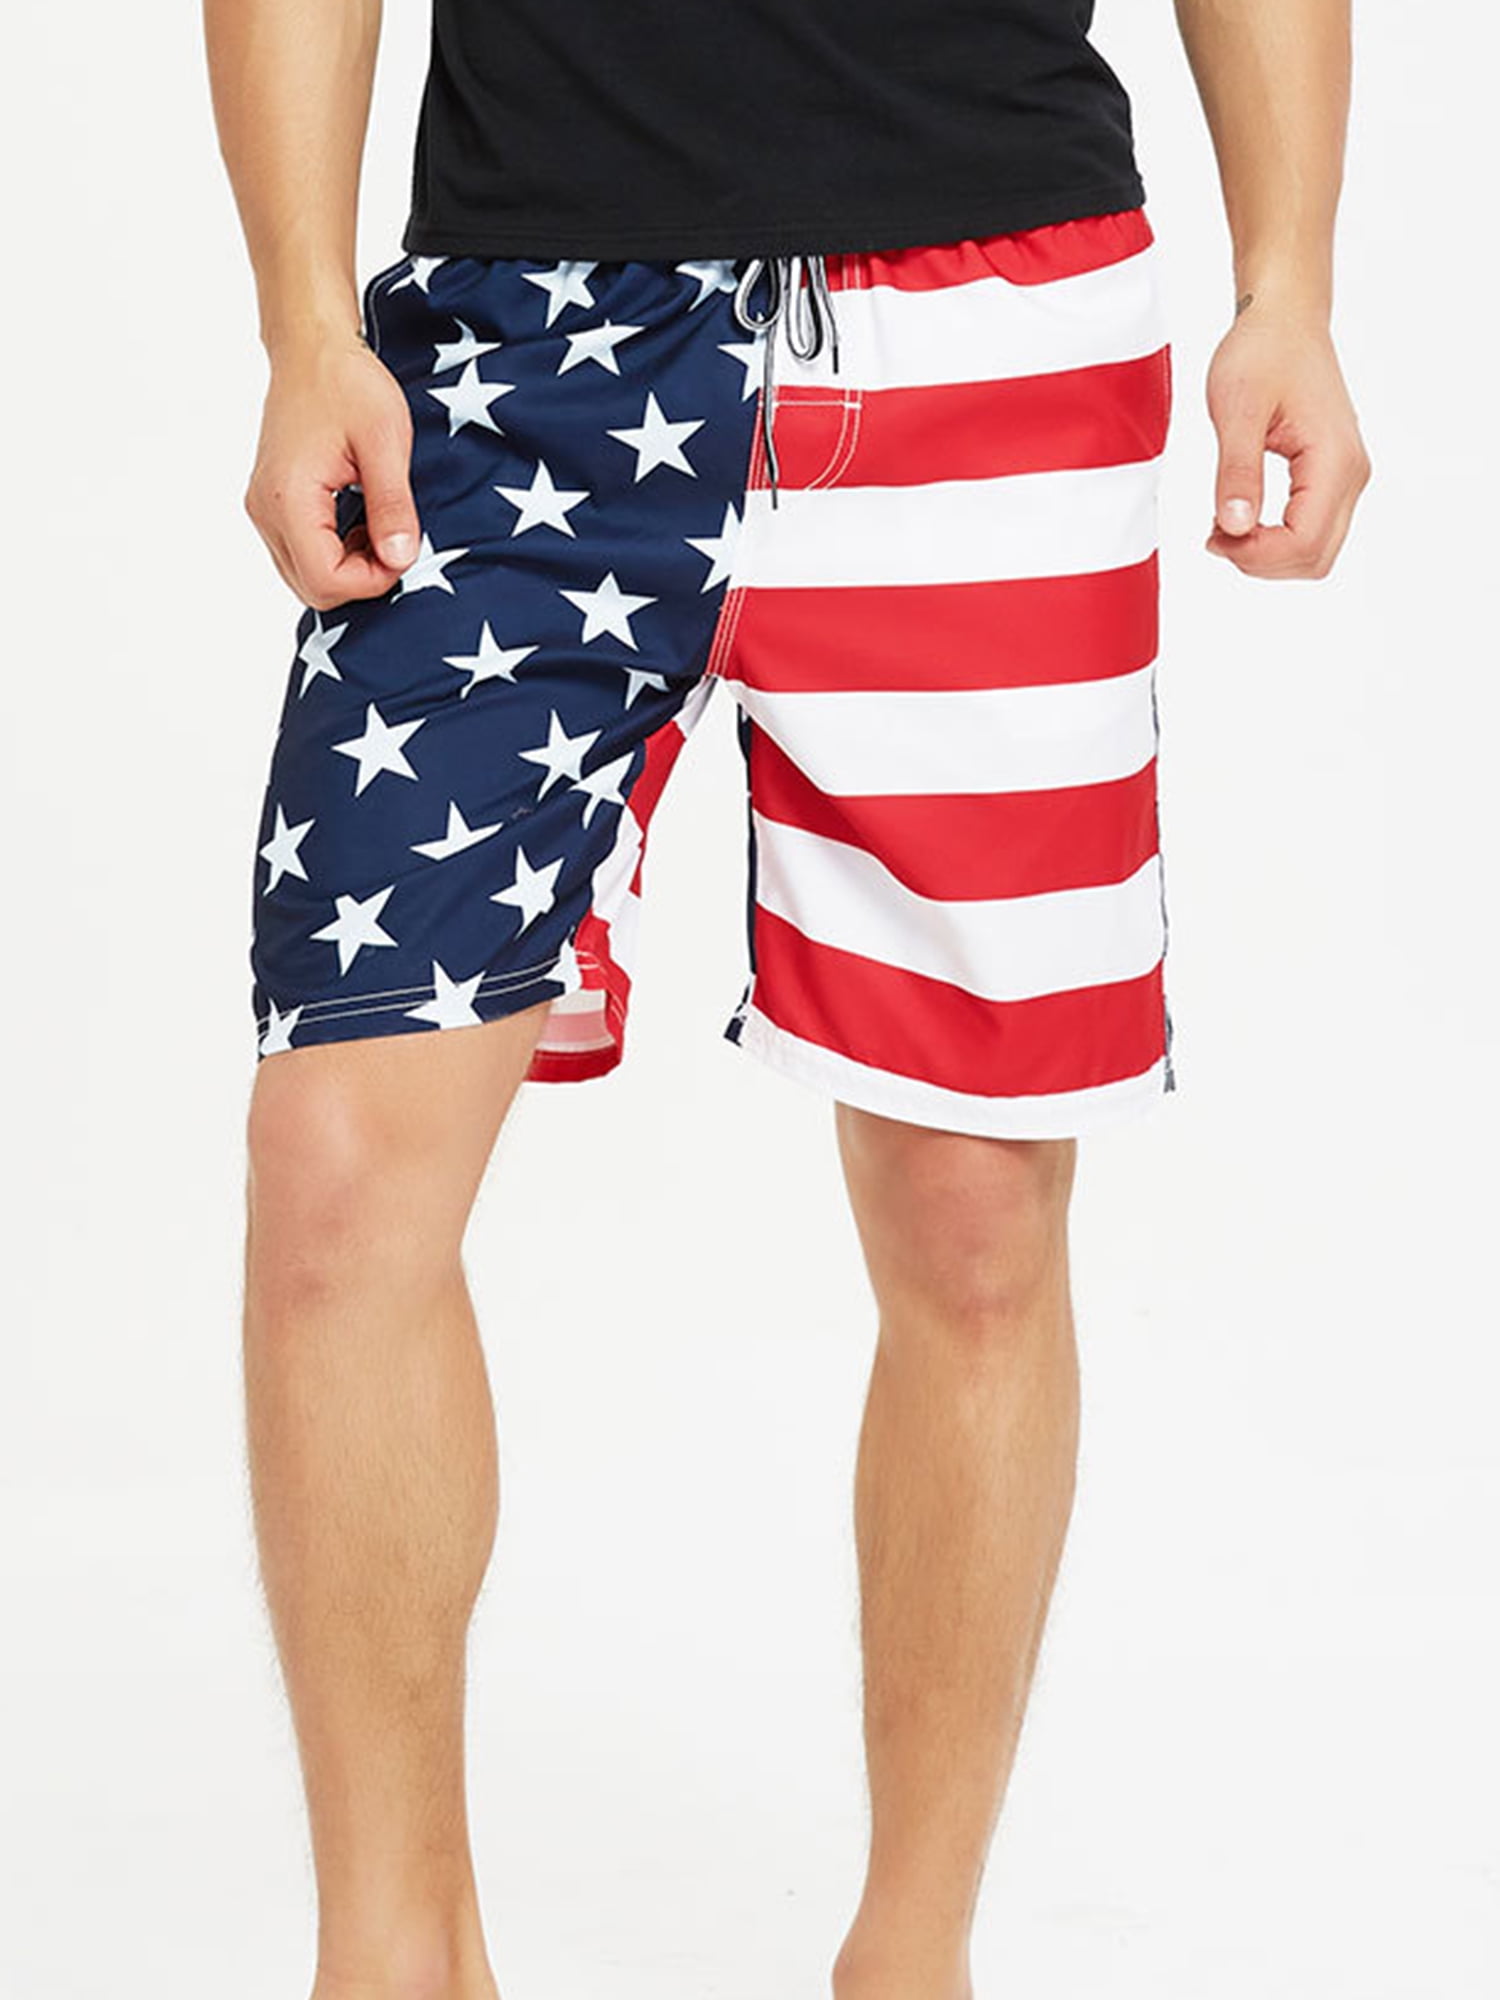 CiCily Men’s Swim Trunks USA Flag Beach Board Shorts Swimming Short Pants Running Sports Surffing Shorts